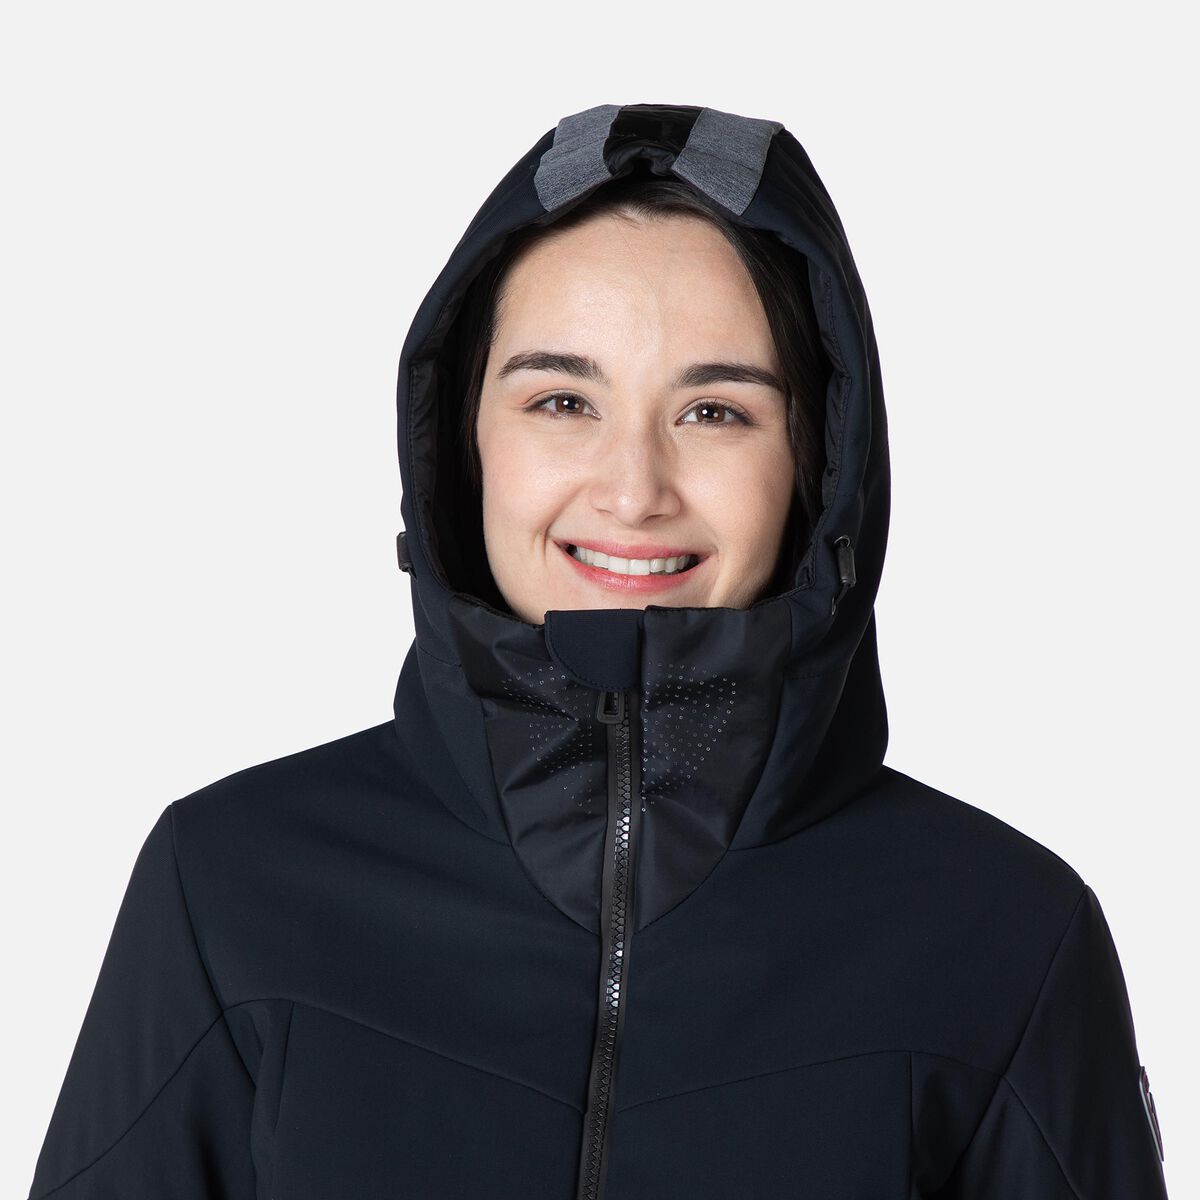 Rossignol Women's Versatile Ski Jacket black